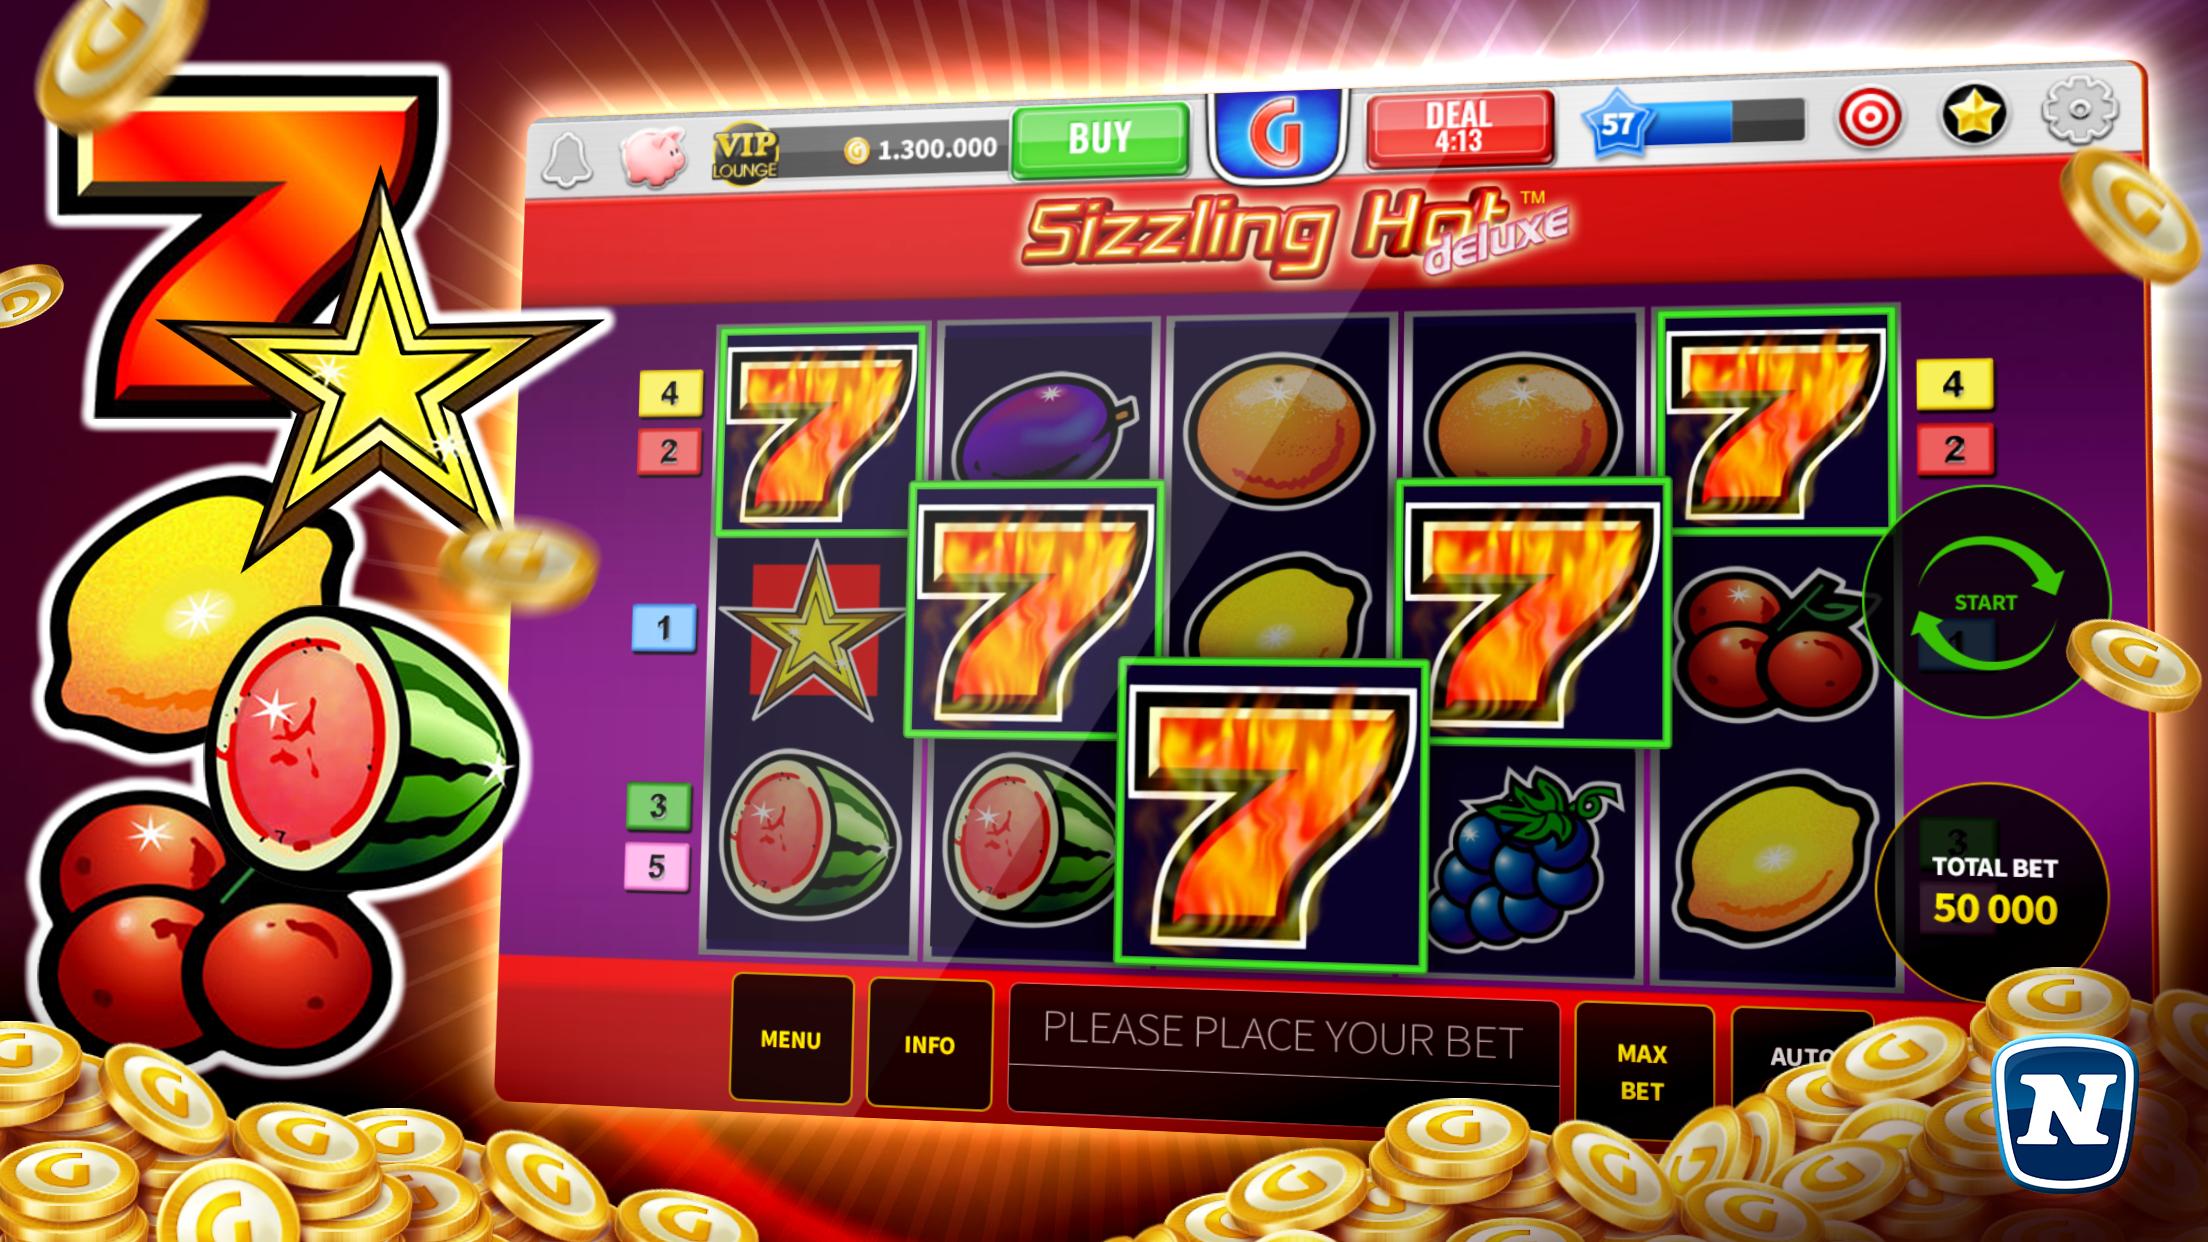 Гейминатор казино онлайн шерон стоун из казино